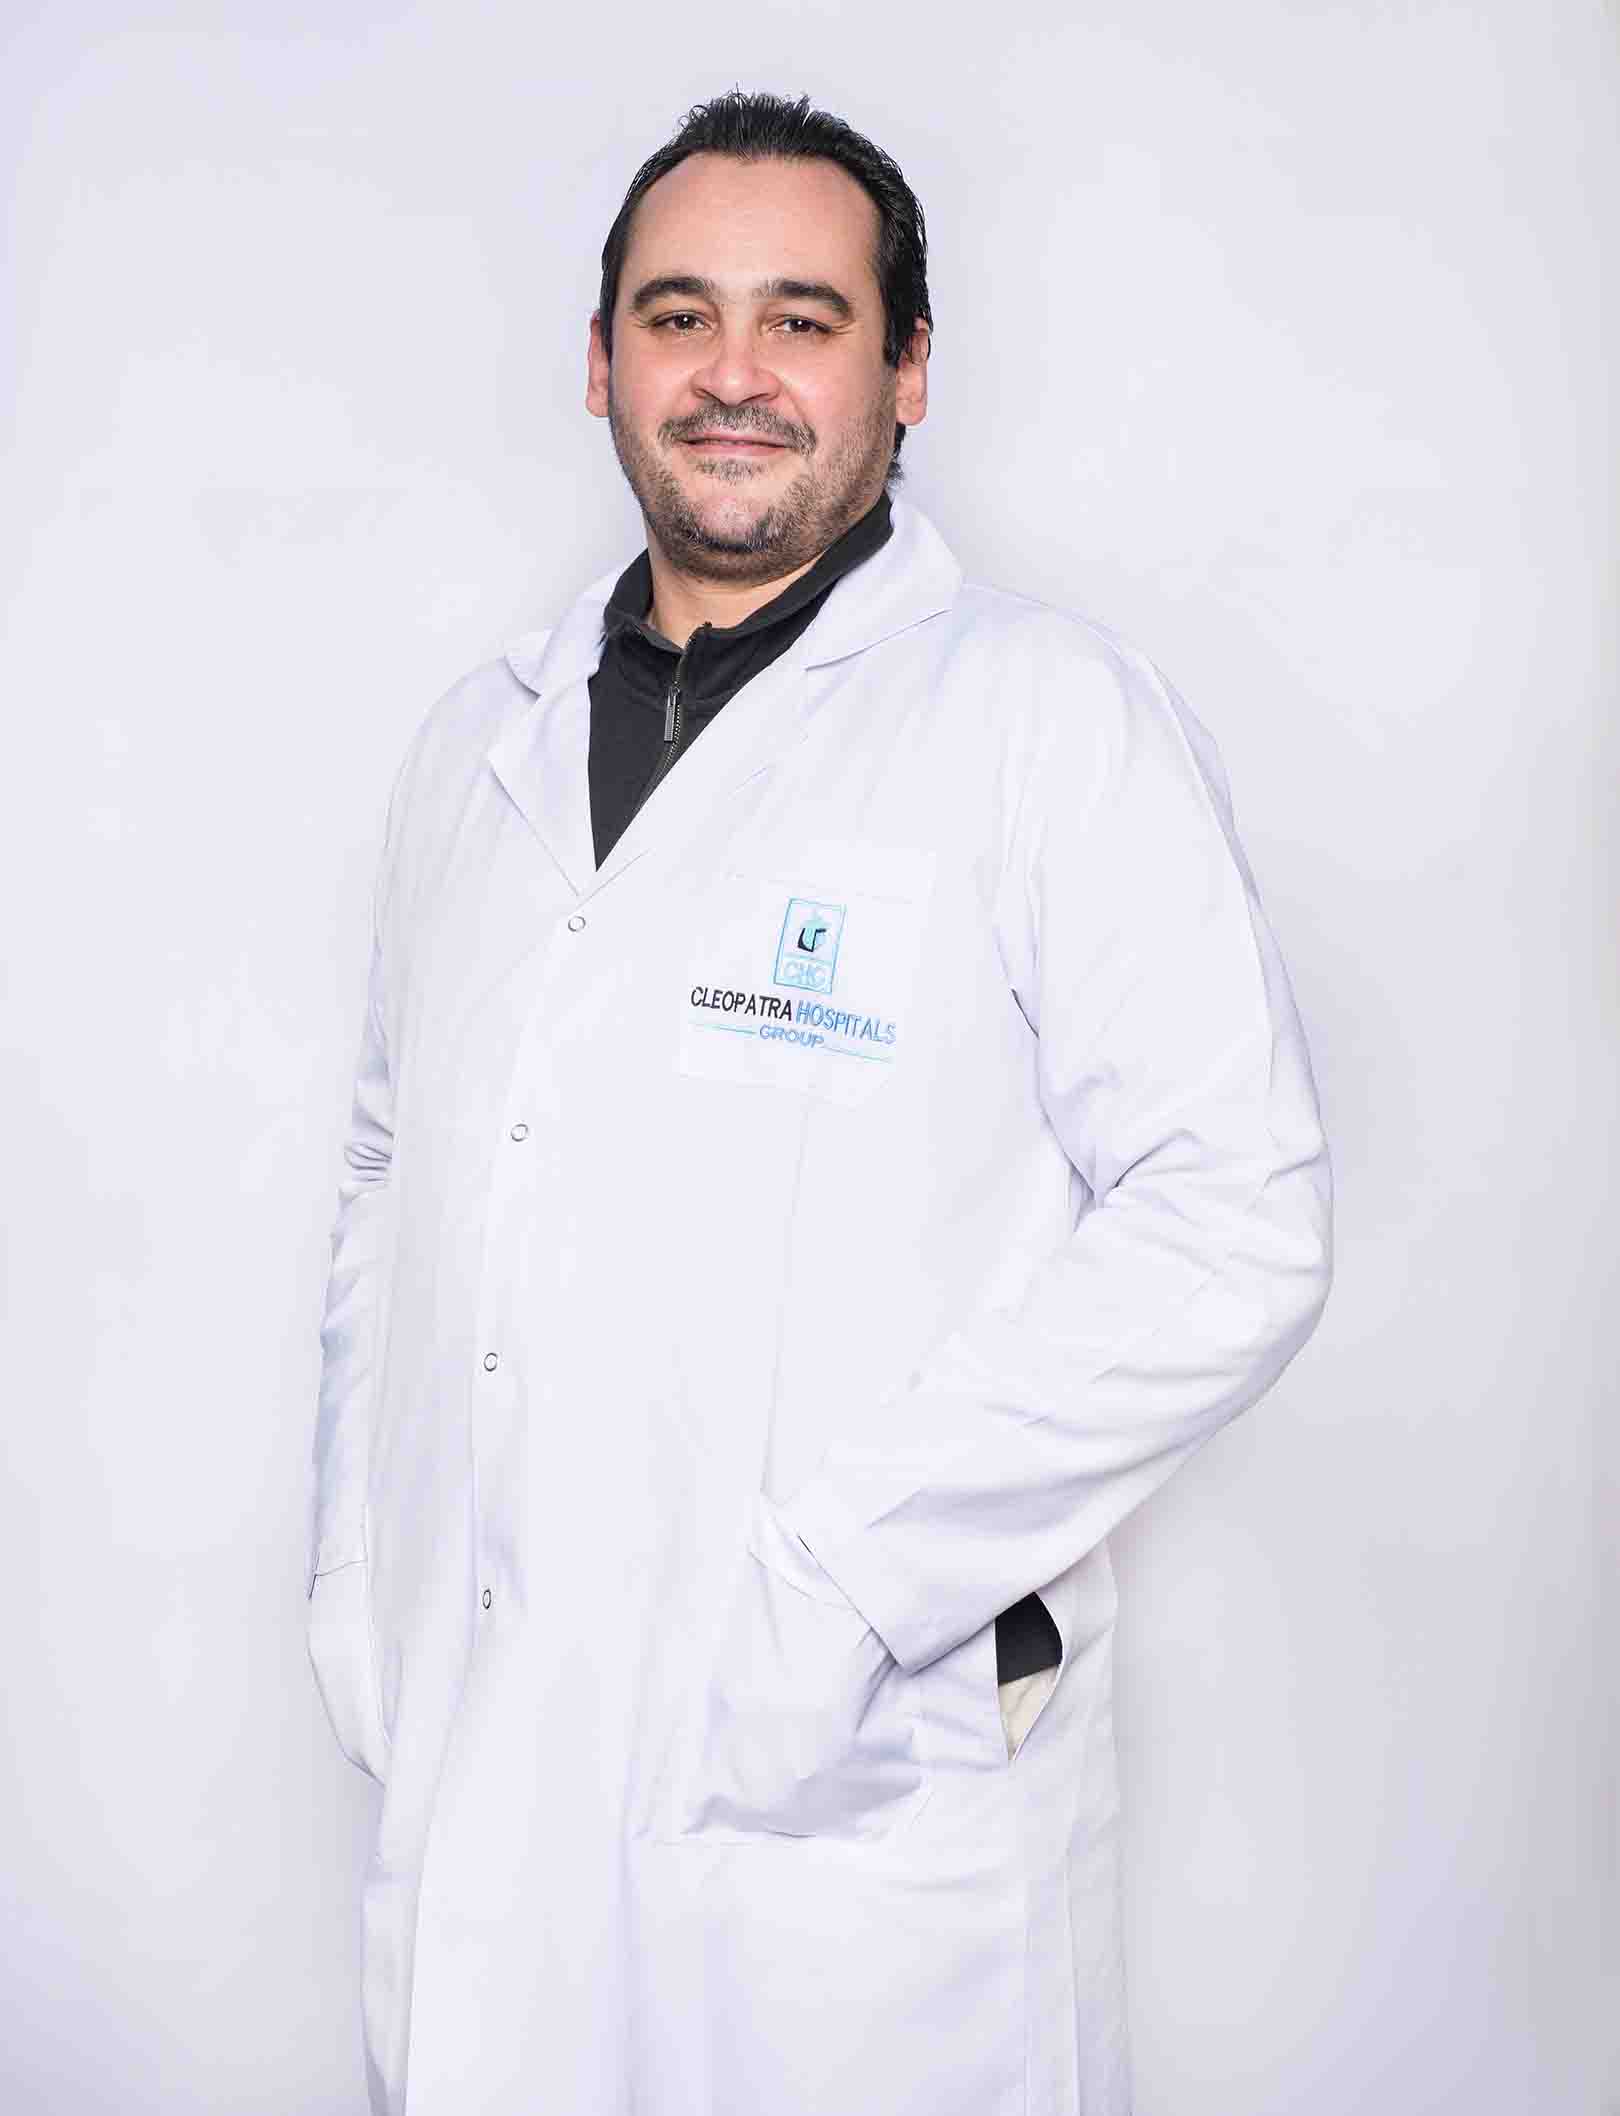 Dr. Haitham Azat Abdulaziz Ismail